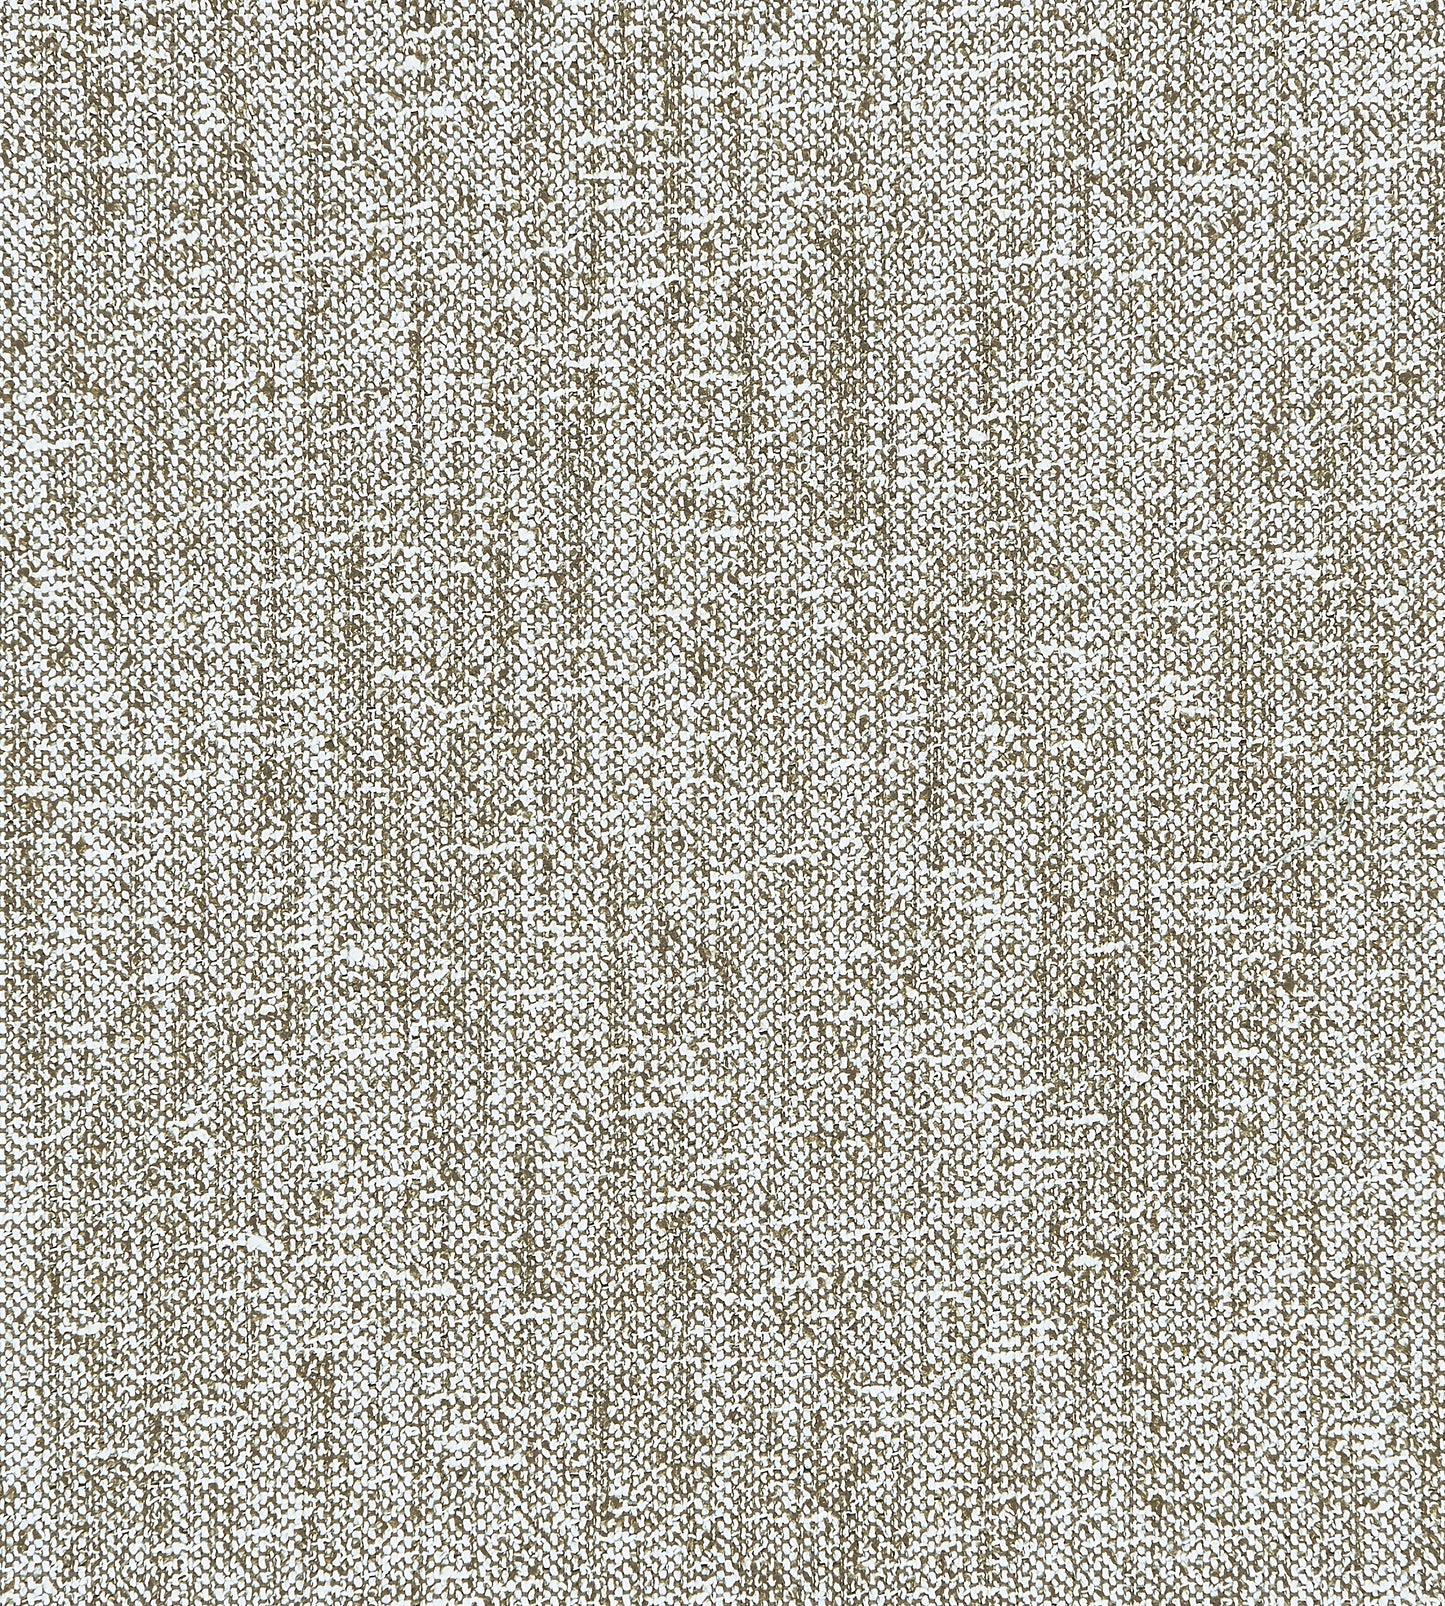 Purchase Scalamandre Fabric Pattern number SC 000527240, Haiku Weave Bark 1